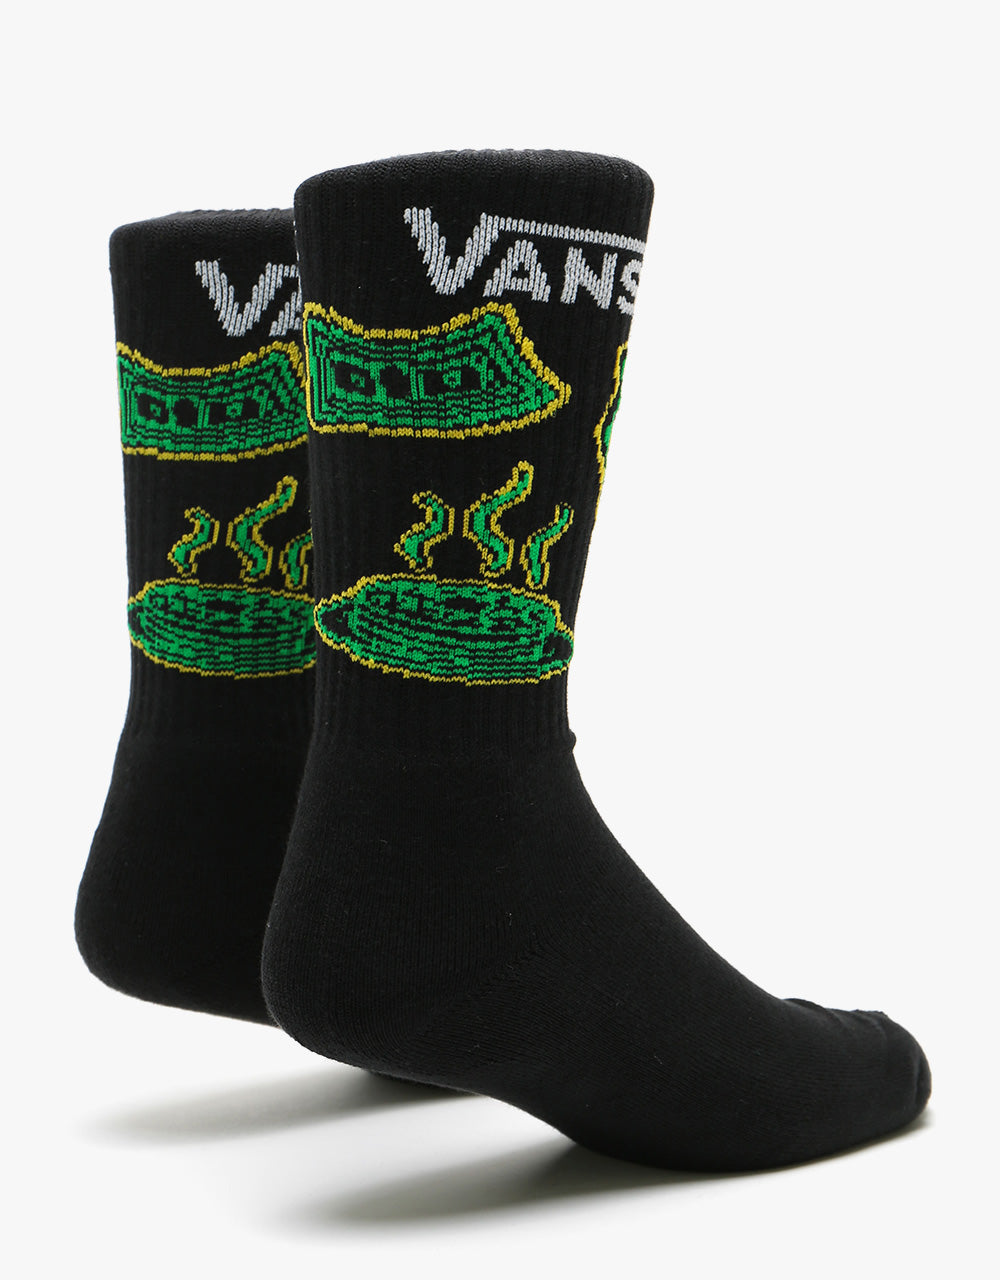 Vans x Shake Junt Crew Socks - Black